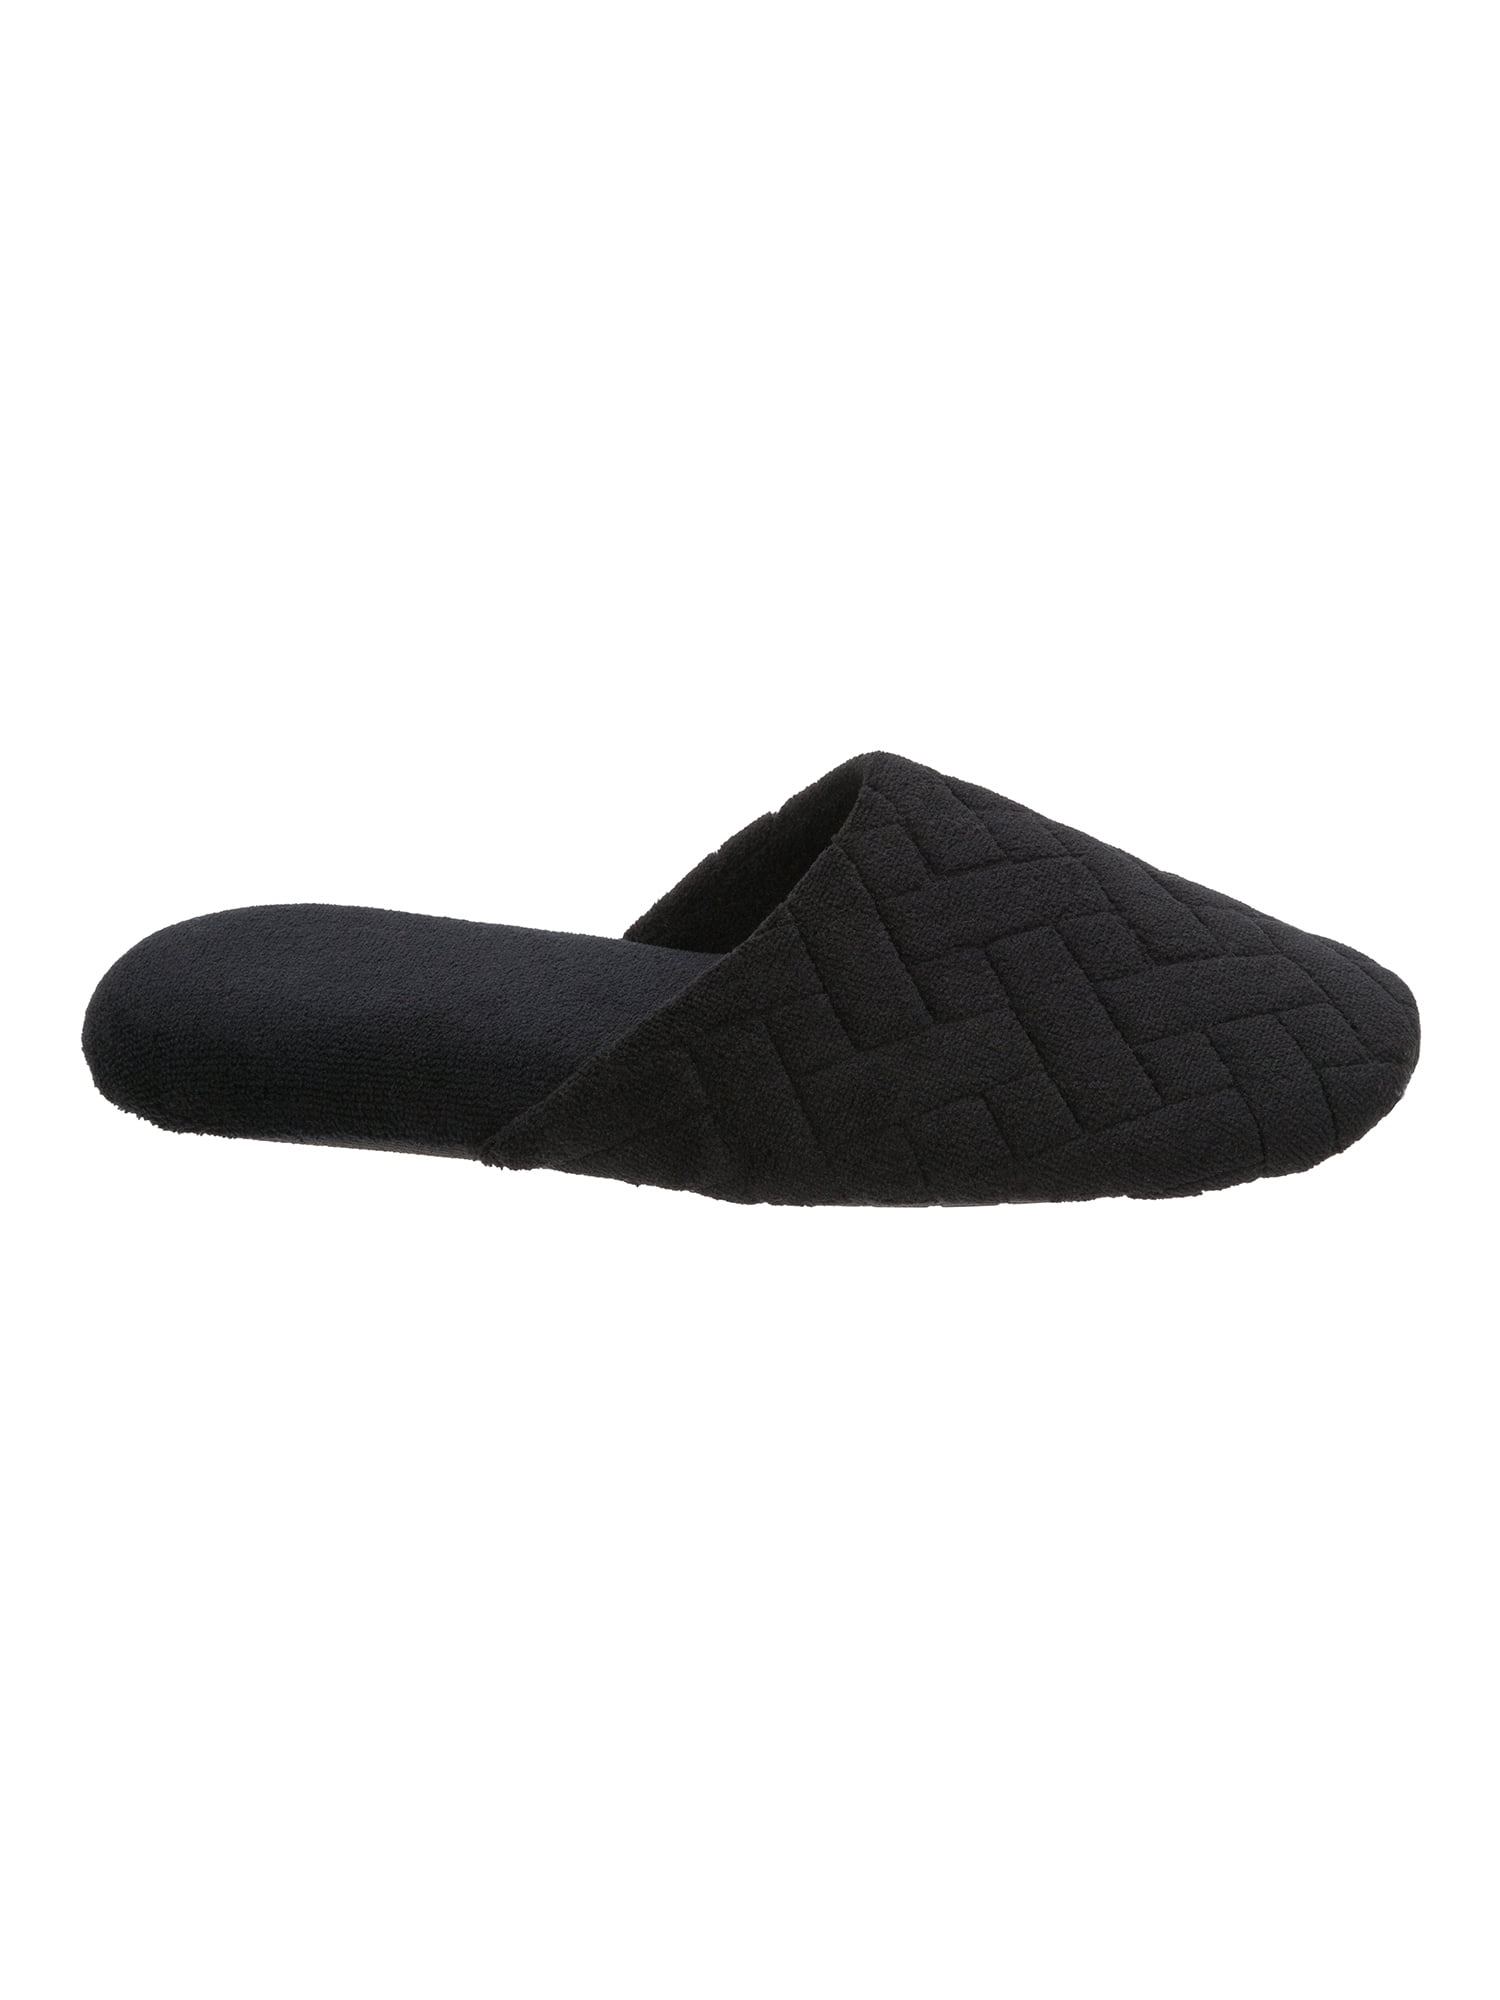 dearfoam scuff slippers